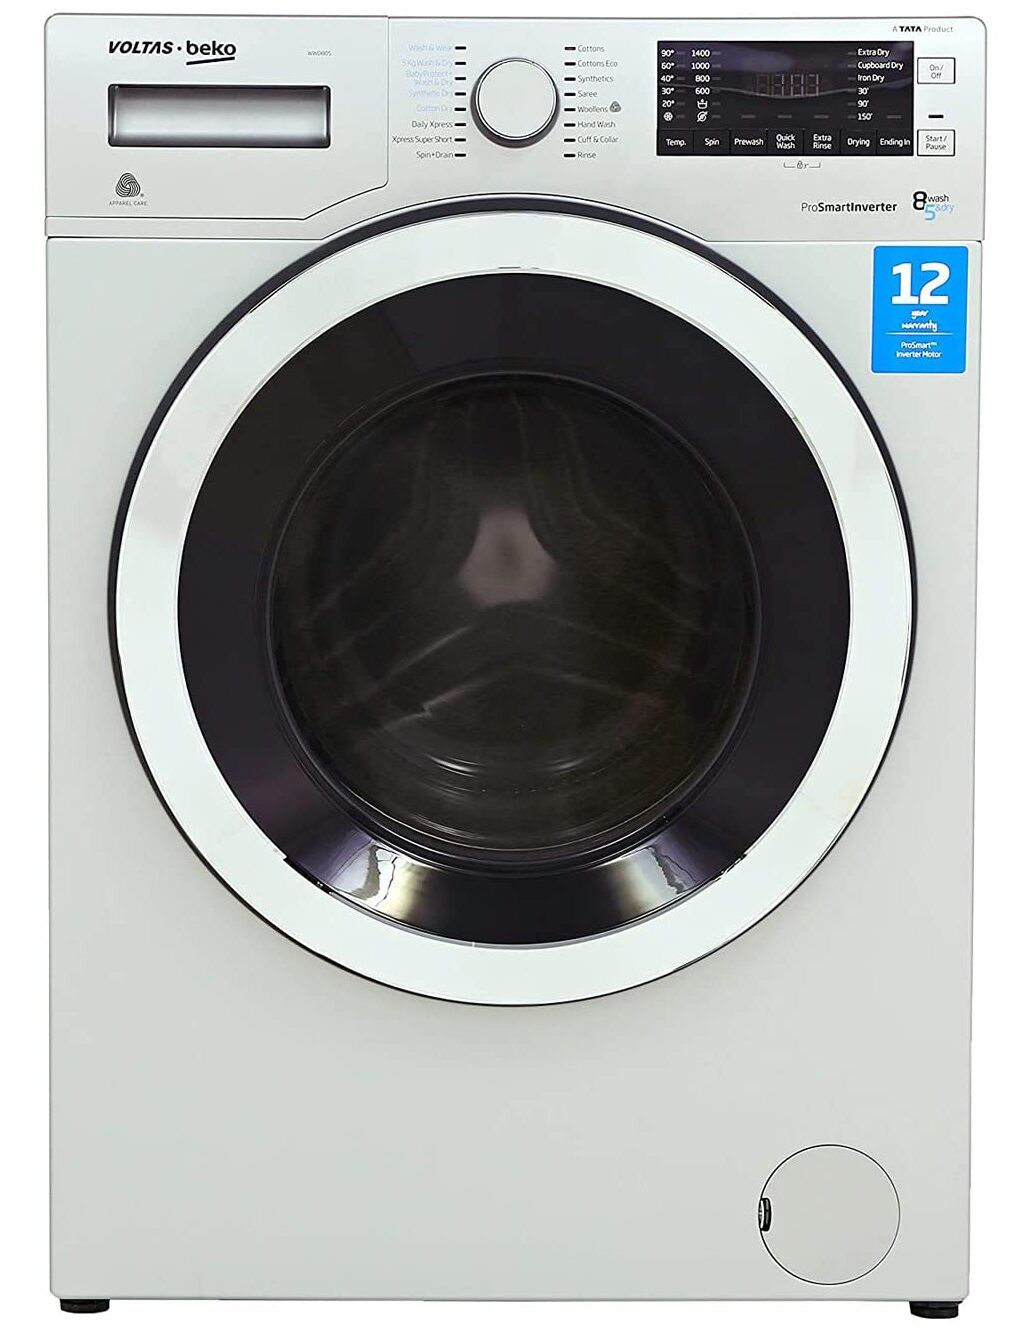 5th washing machine 1